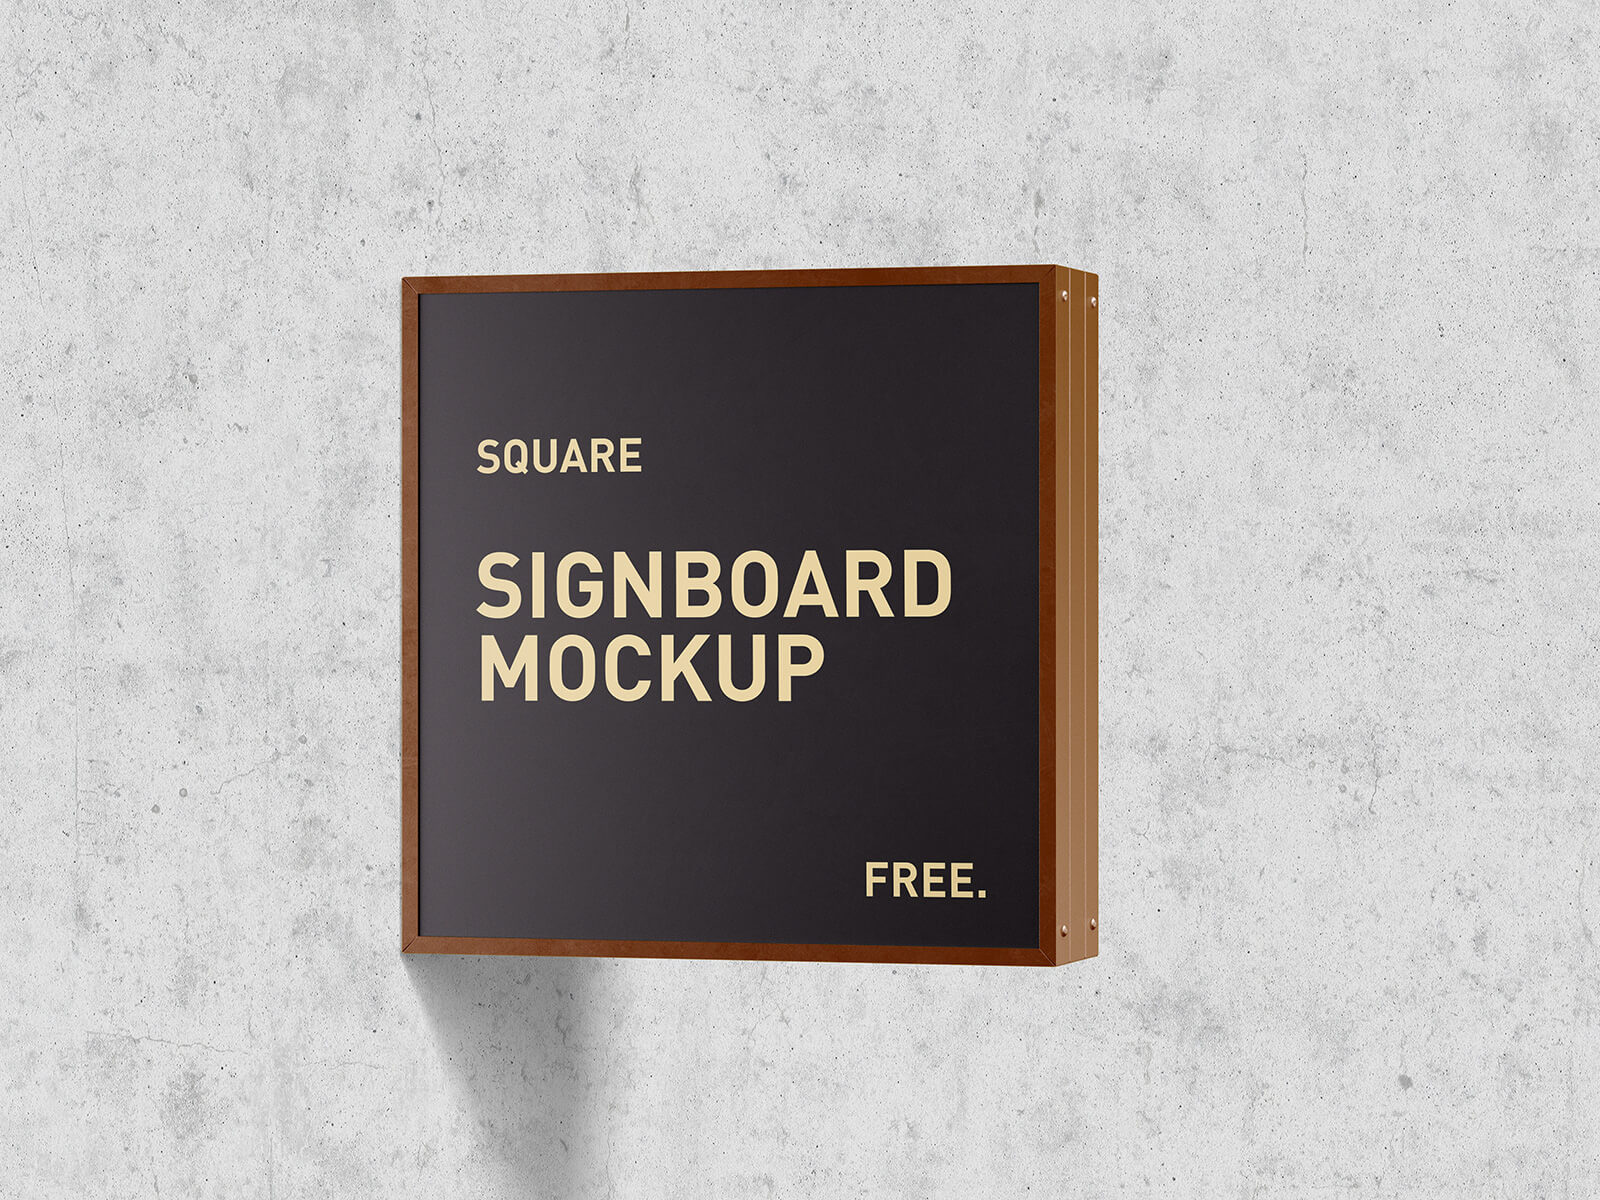 Free Wall Mounted Square Signboard Mockup PSD Files